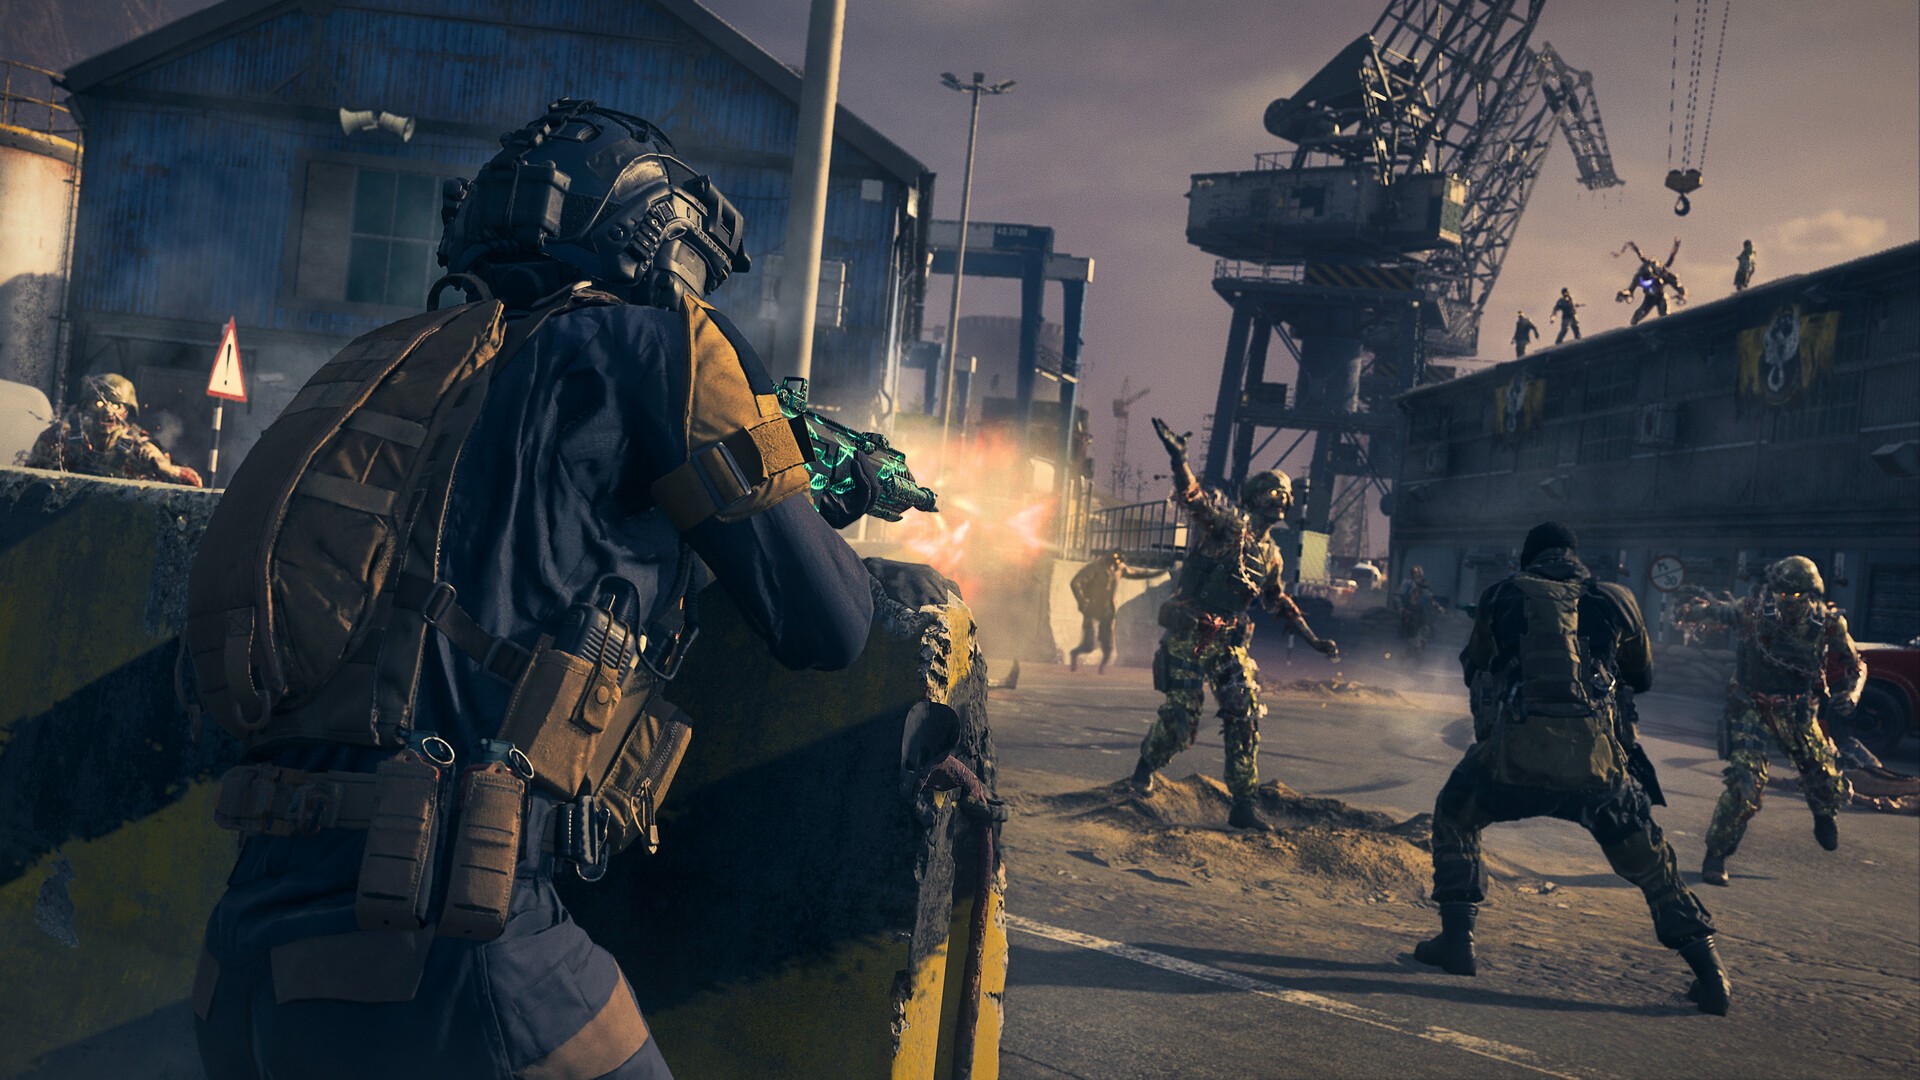 Call of Duty: Modern Warfare III Vault Edition Xbox One, Xbox Series